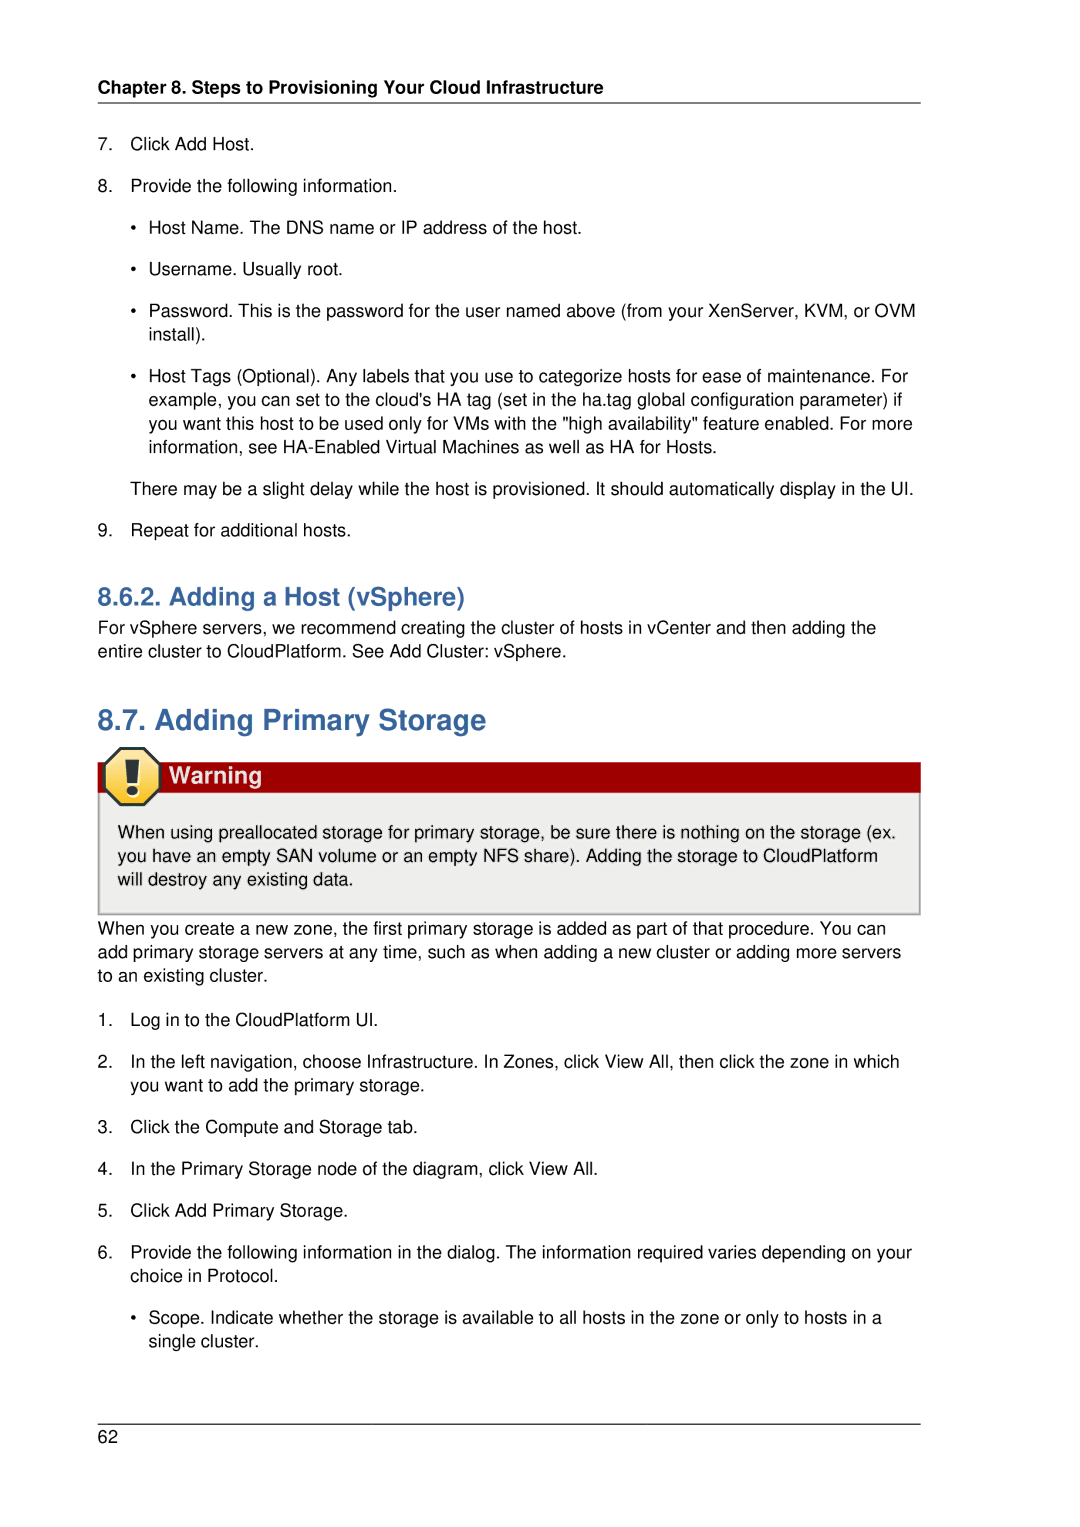 Citrix Systems 4.2 manual Adding Primary Storage, Adding a Host vSphere 